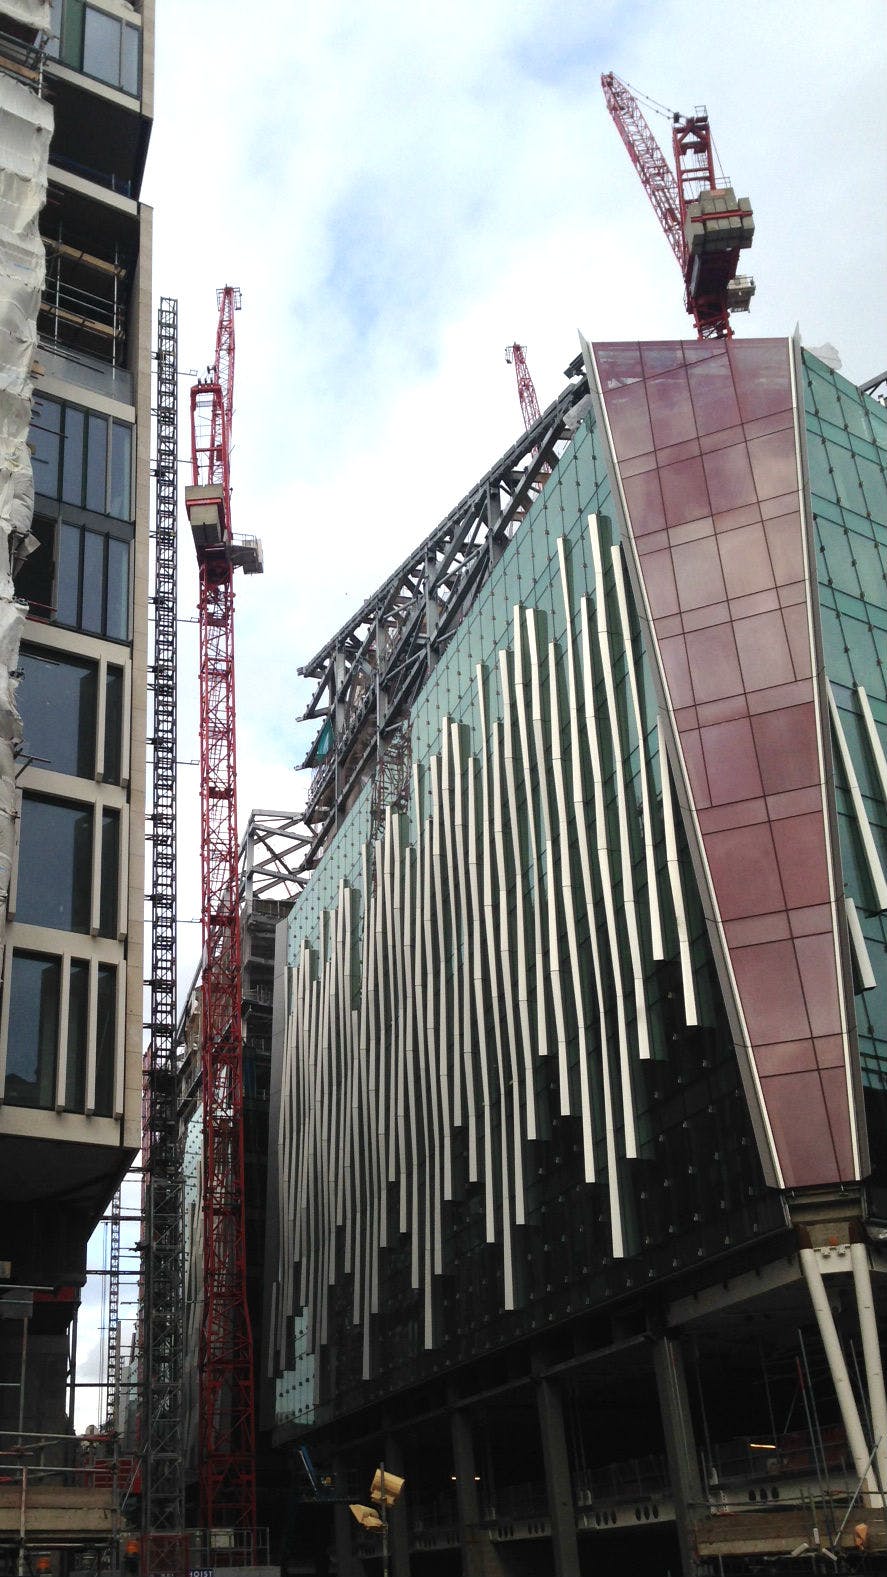 Skyjack Lifts Helping Build London's Upscale Nova Victoria | Construction News